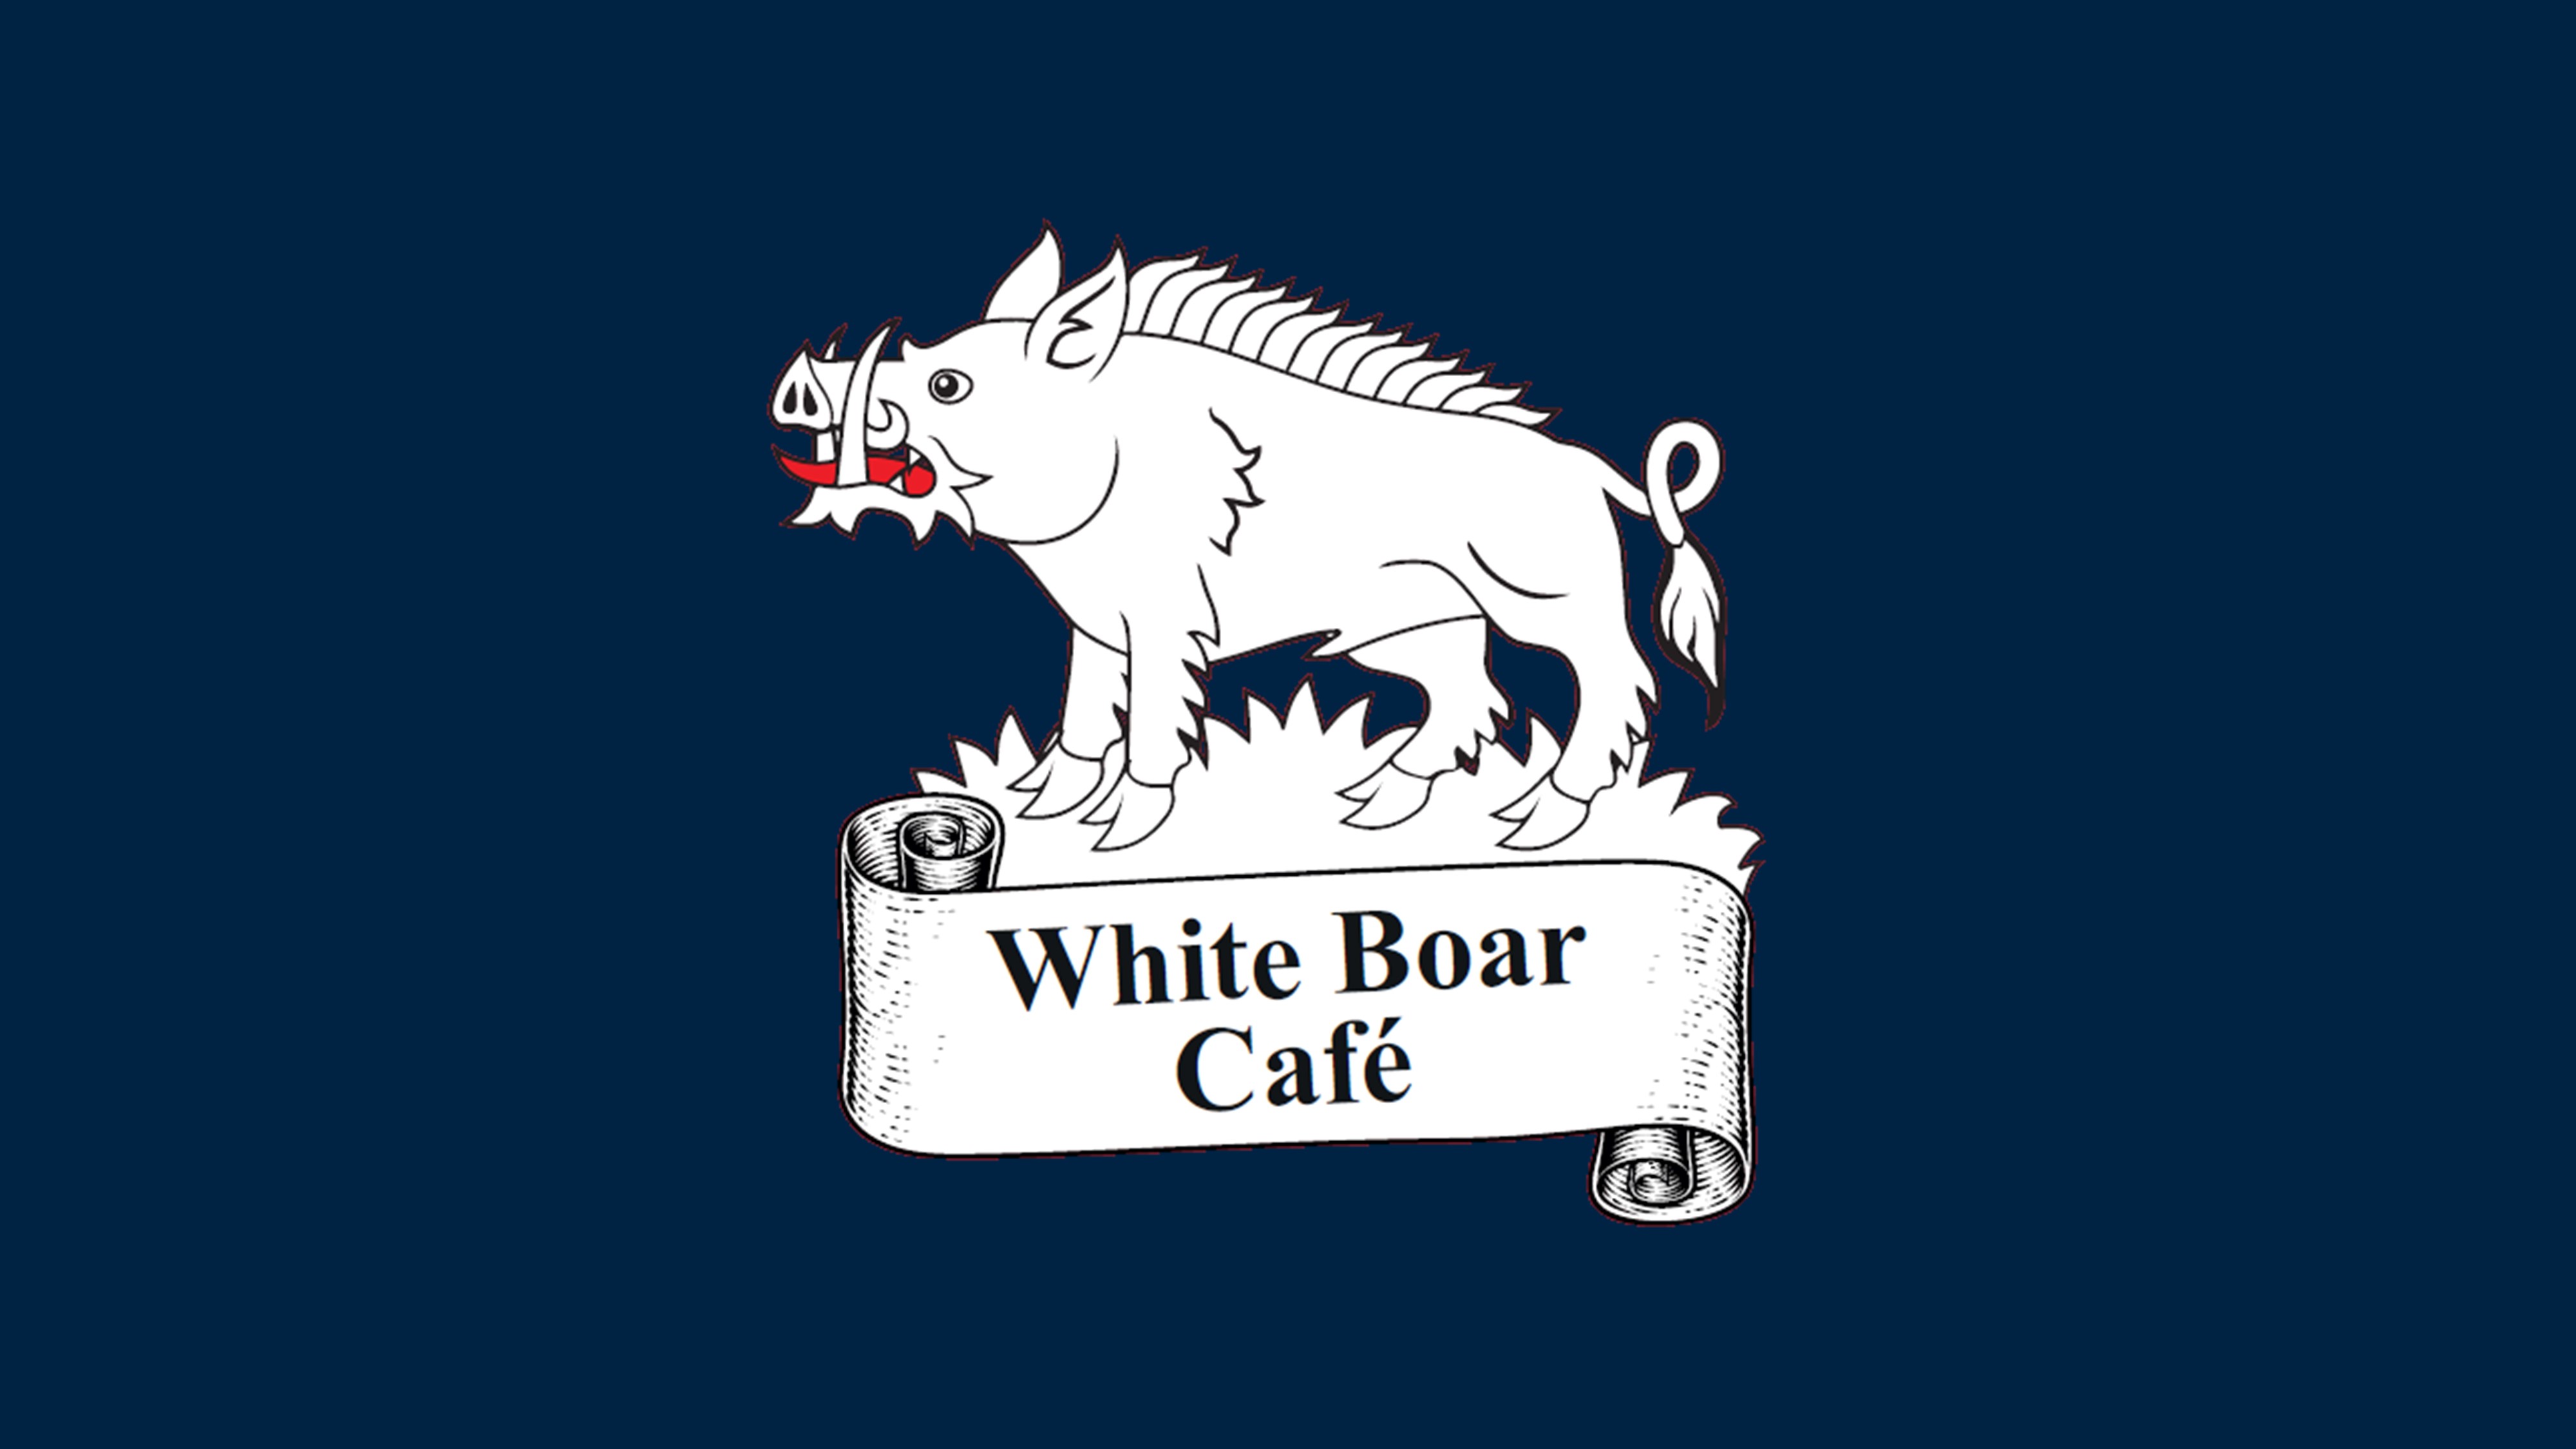 White Boar Cafe (1)